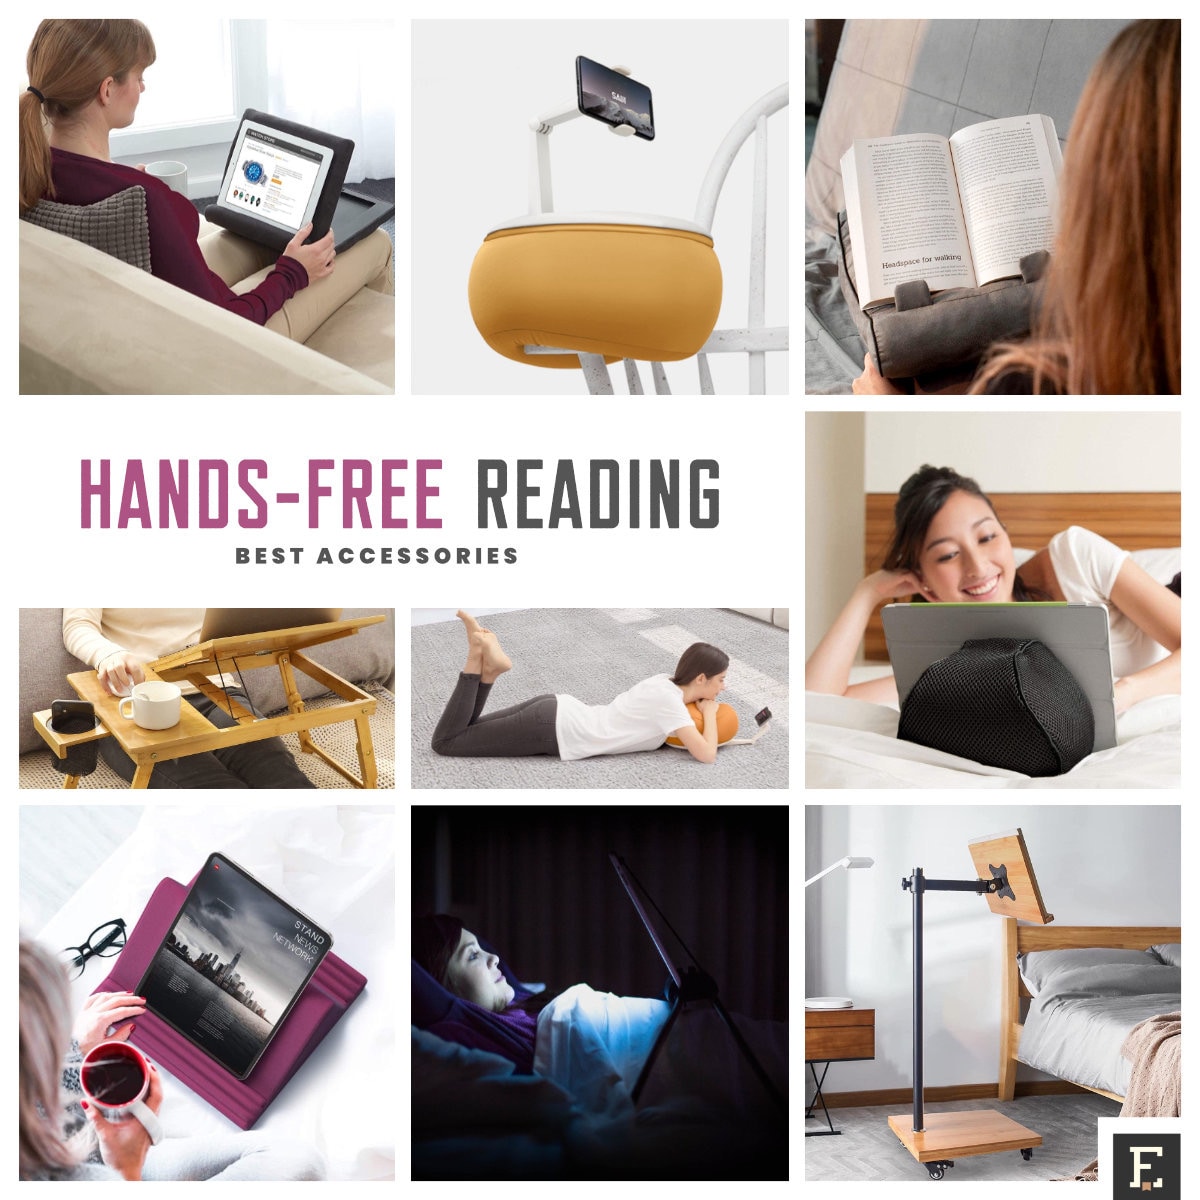 Best hands-free accessories ebooks print books